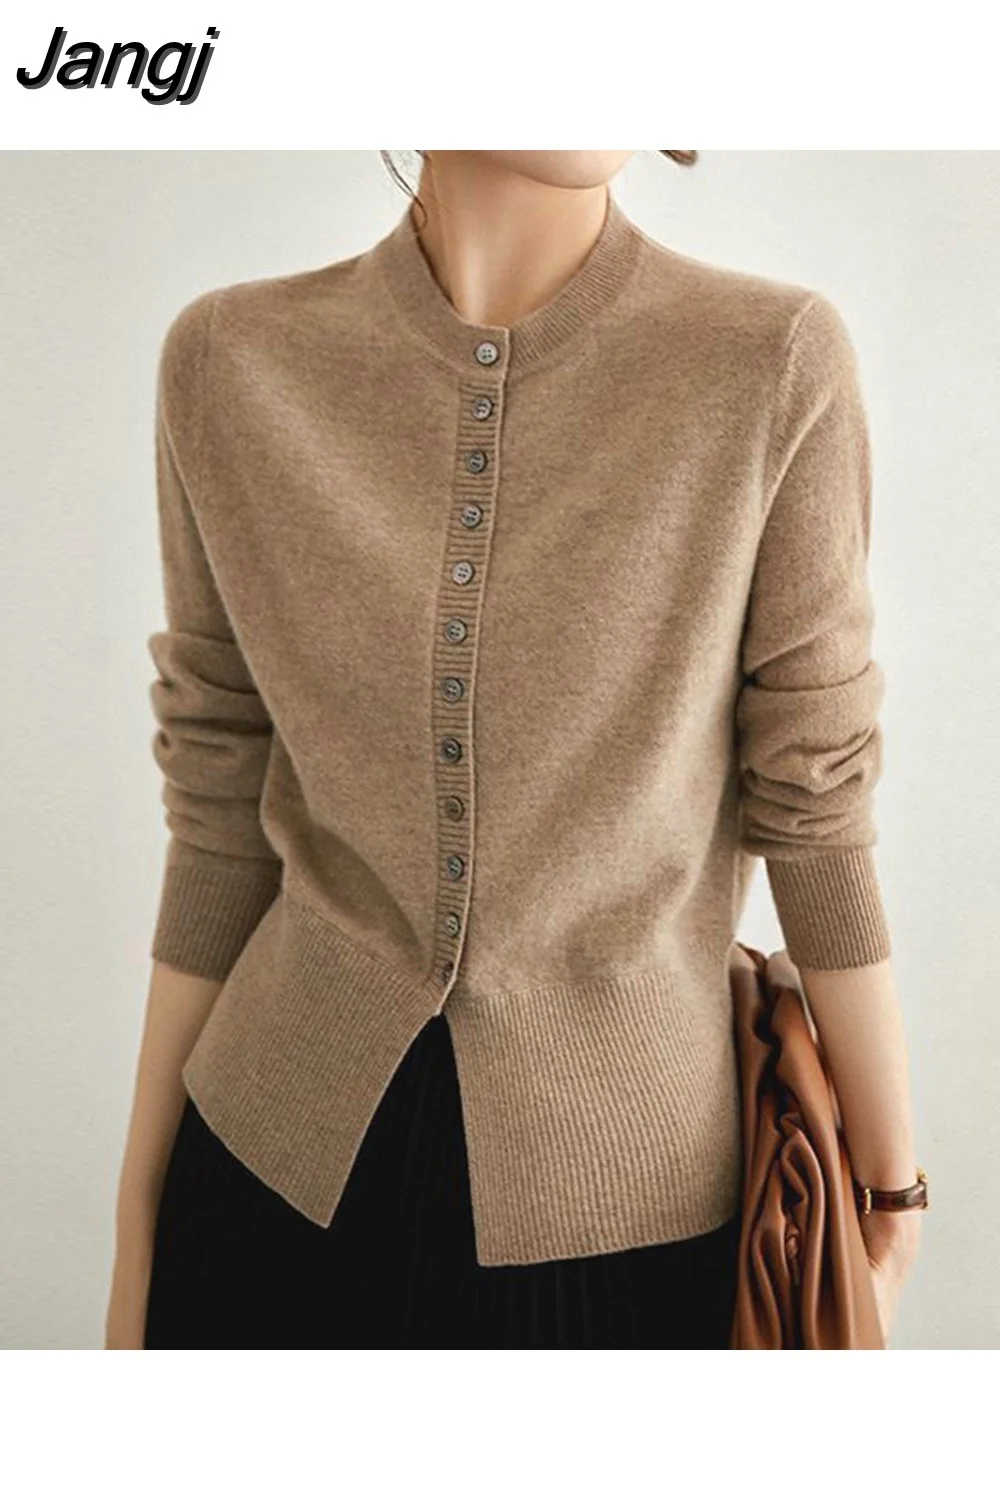 Jangj Winter Elegant Fashion Solid Simple Sweater Cardigan Top Women Long Sleeve All-match Buttons Coat Ladies Knitting Jacket 1020-0